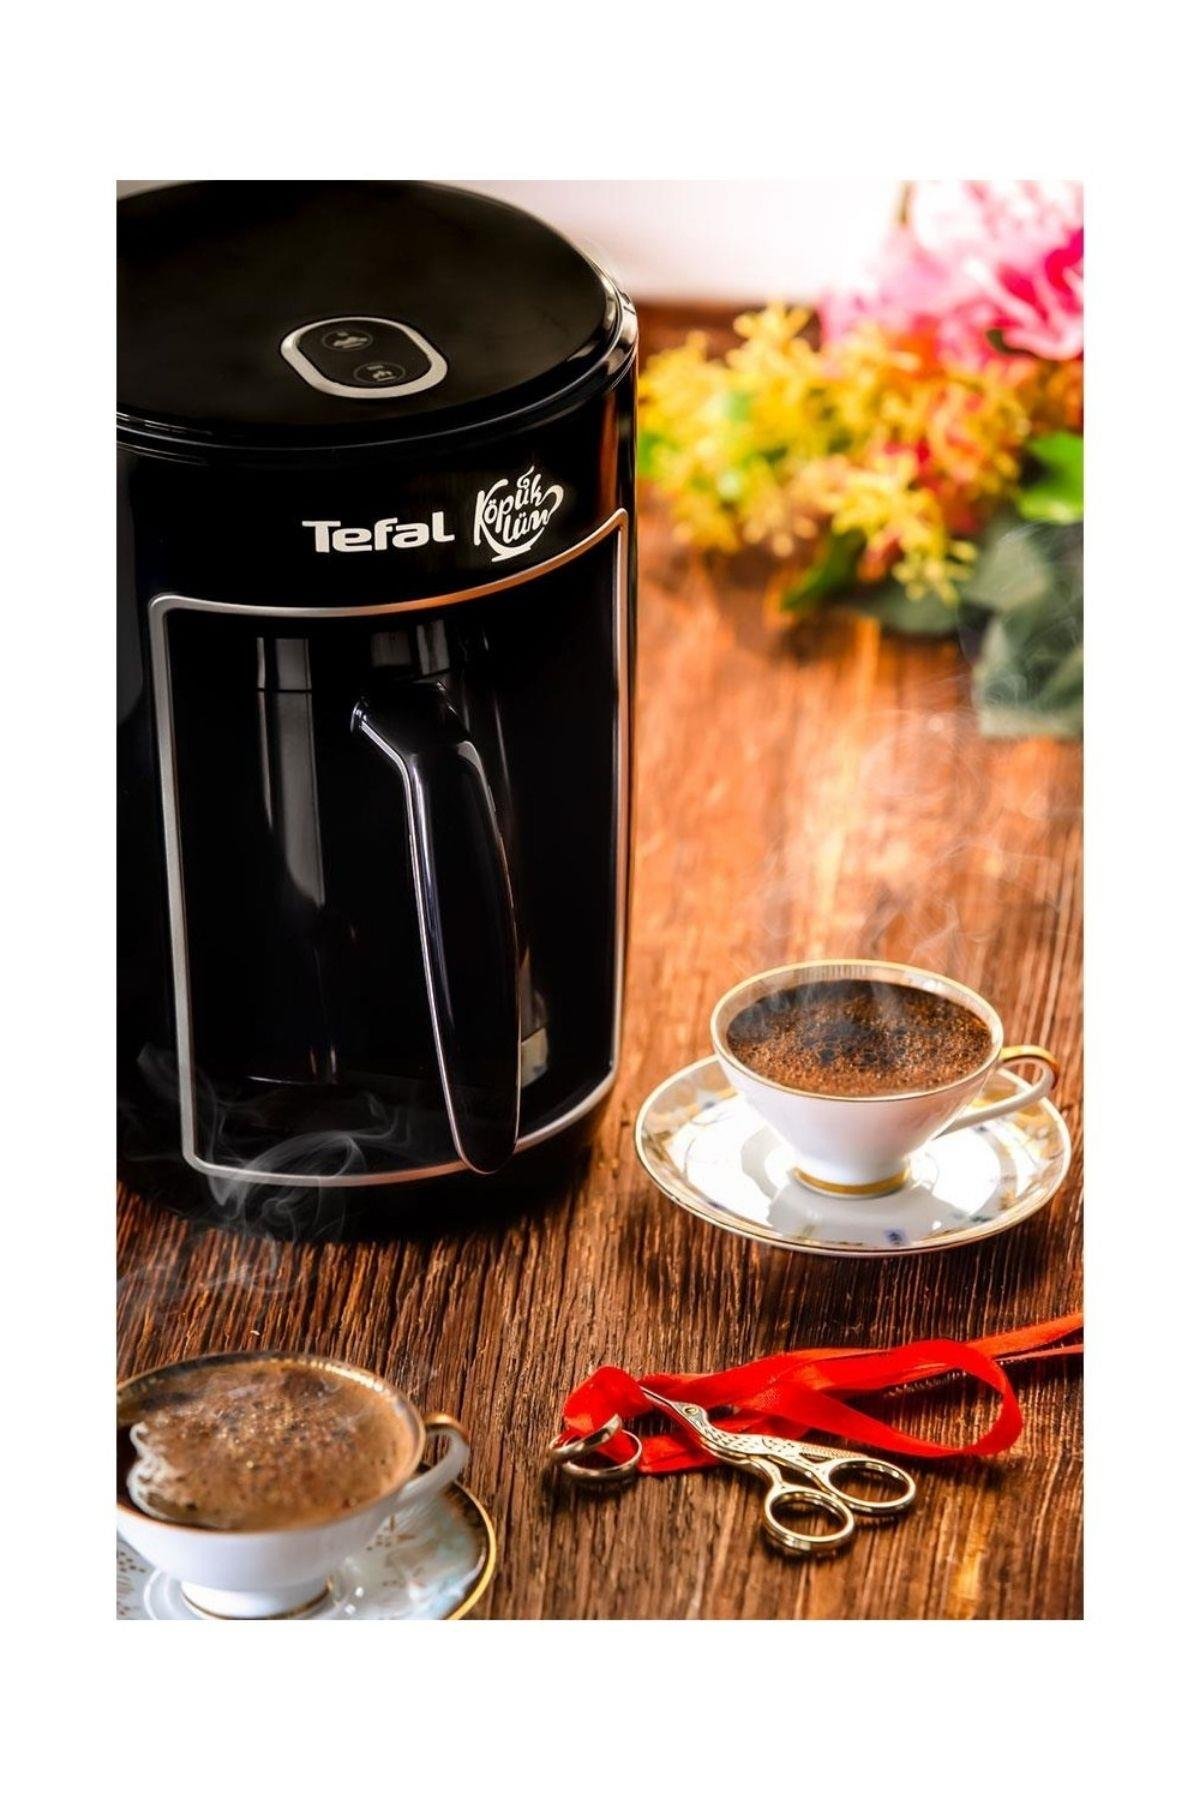 Tefal Köpüklüm Türk Kahve Makinesi Siyah